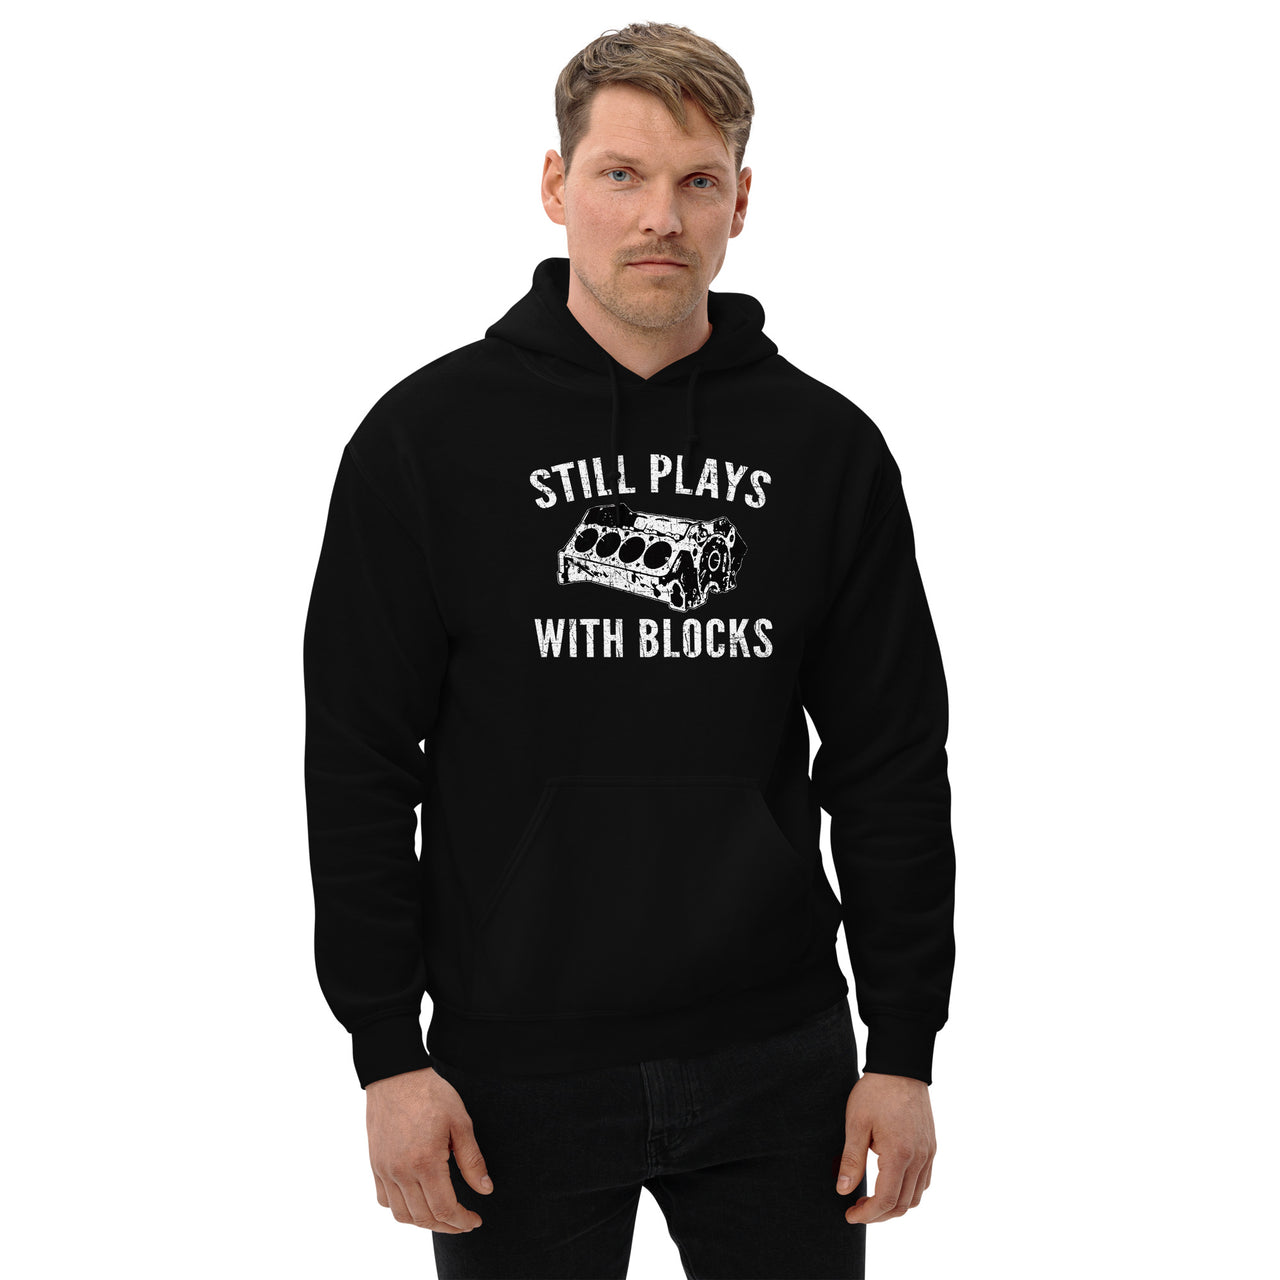 Still Plays With Blocks Car Enthusiast Hoodie Sweatshirt modeled in black